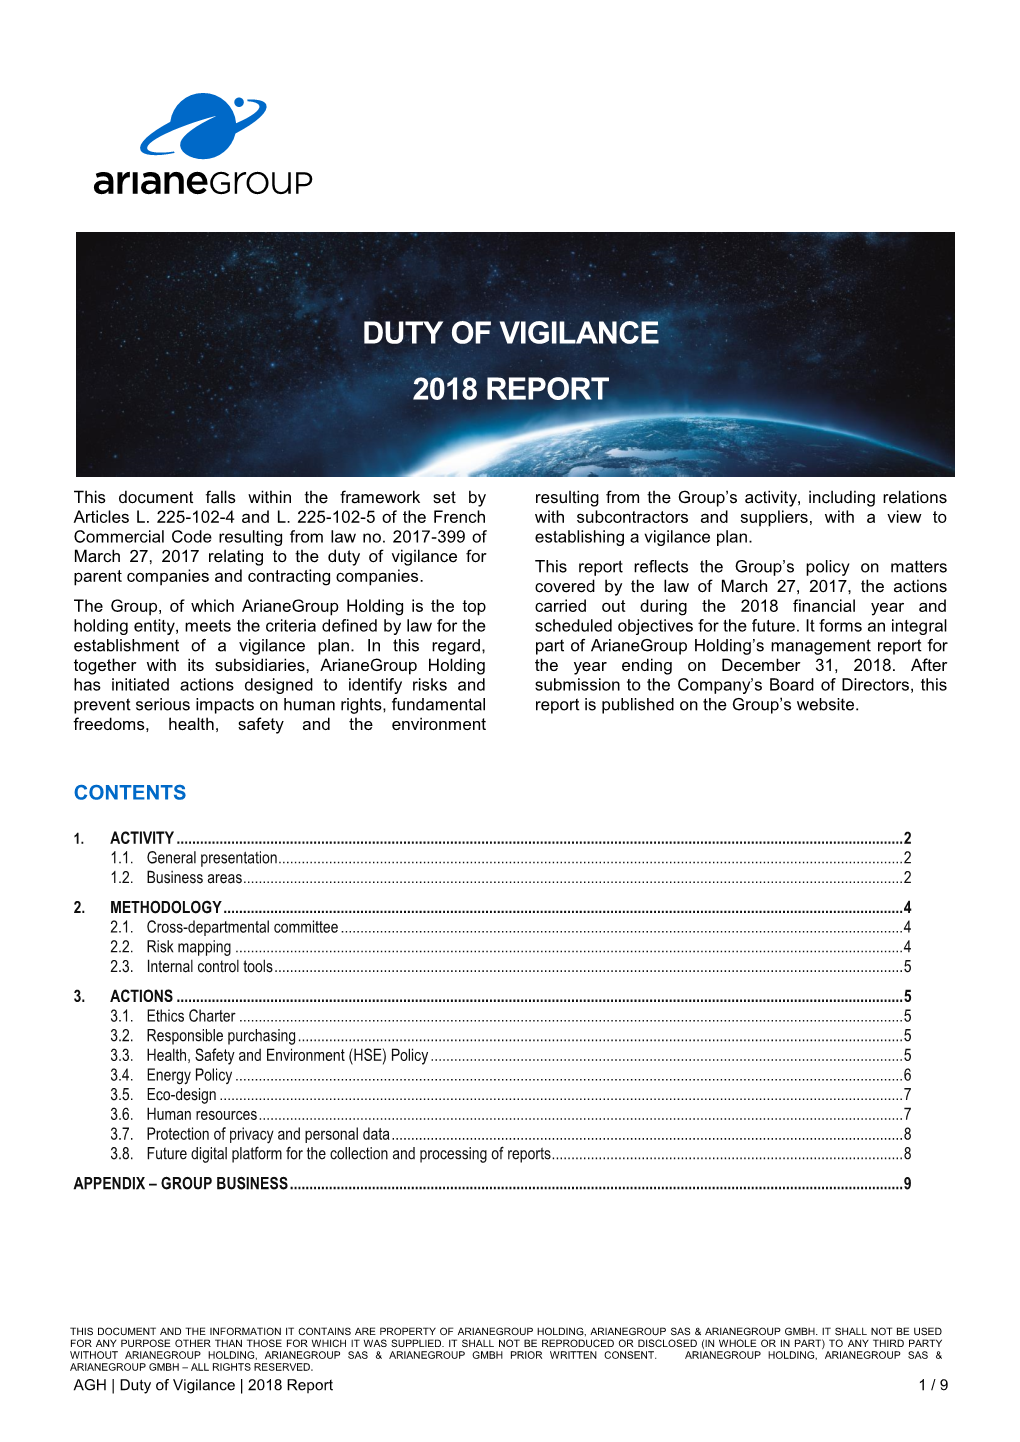 Duty of Vigilance 2018 Report